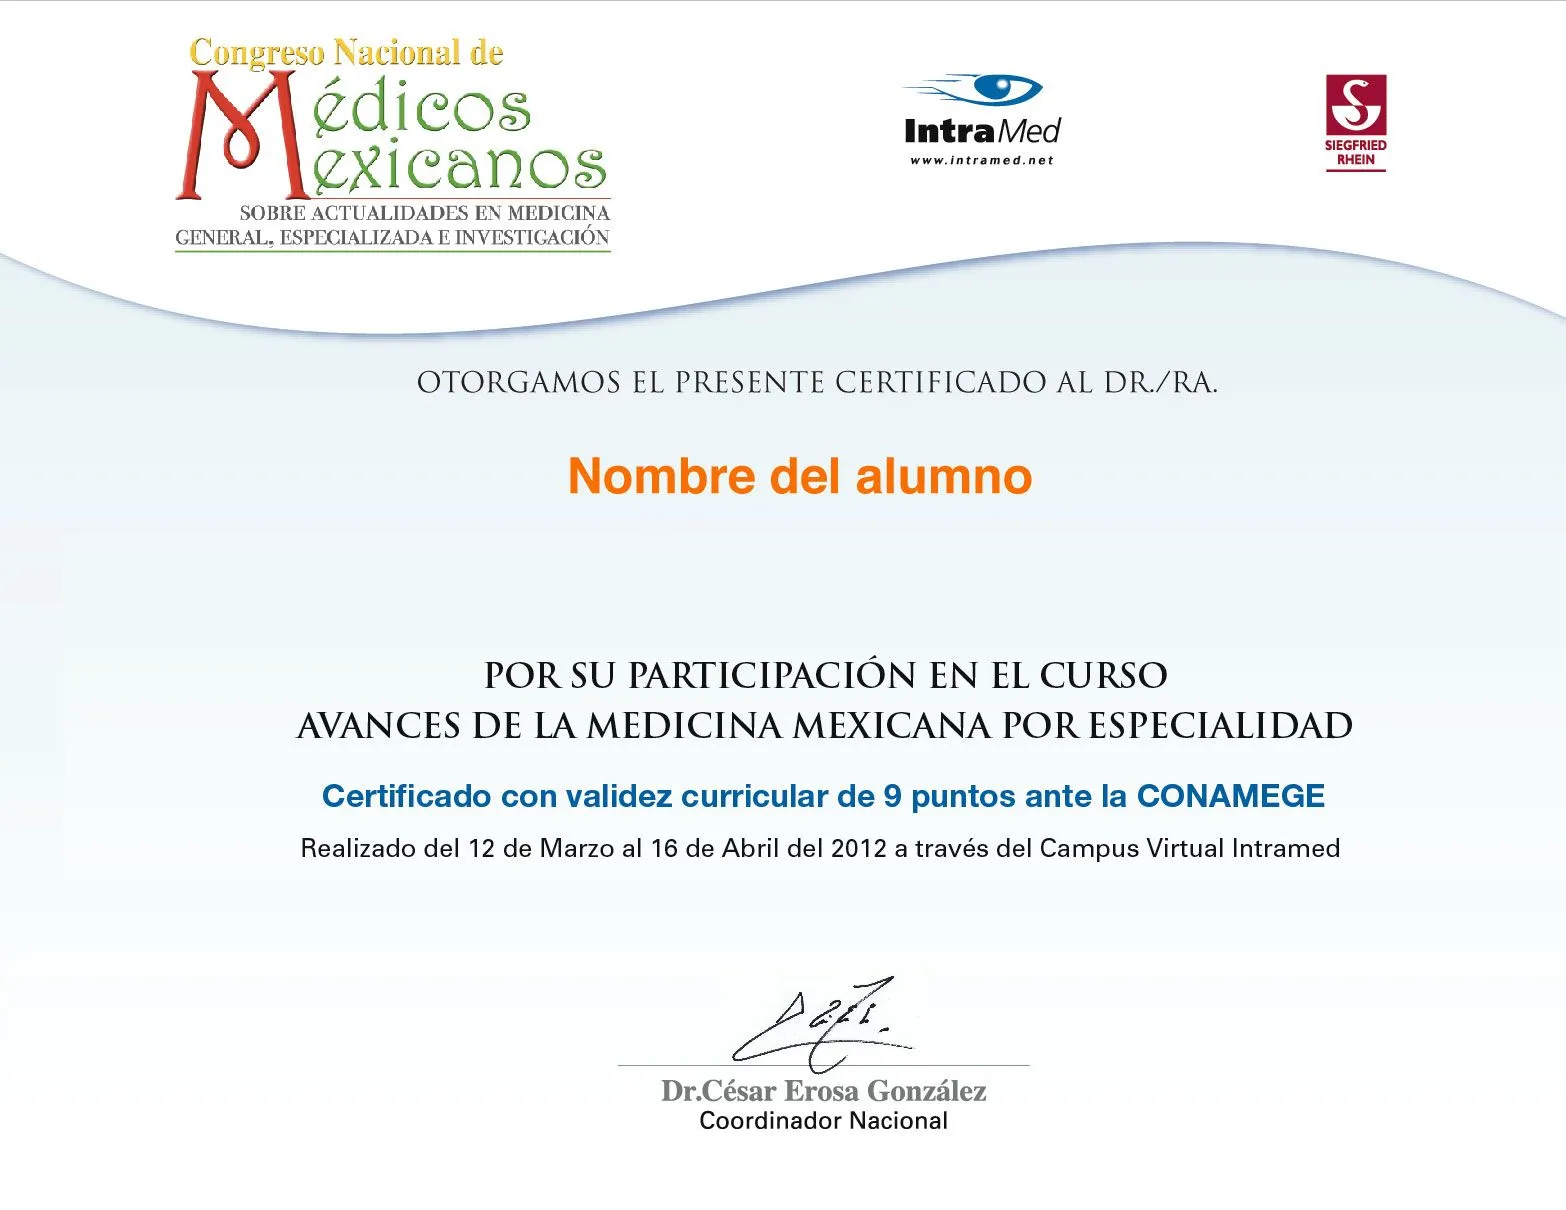 Congreso Nacional de Médicos Mexicanos - IntraMed - Eventos